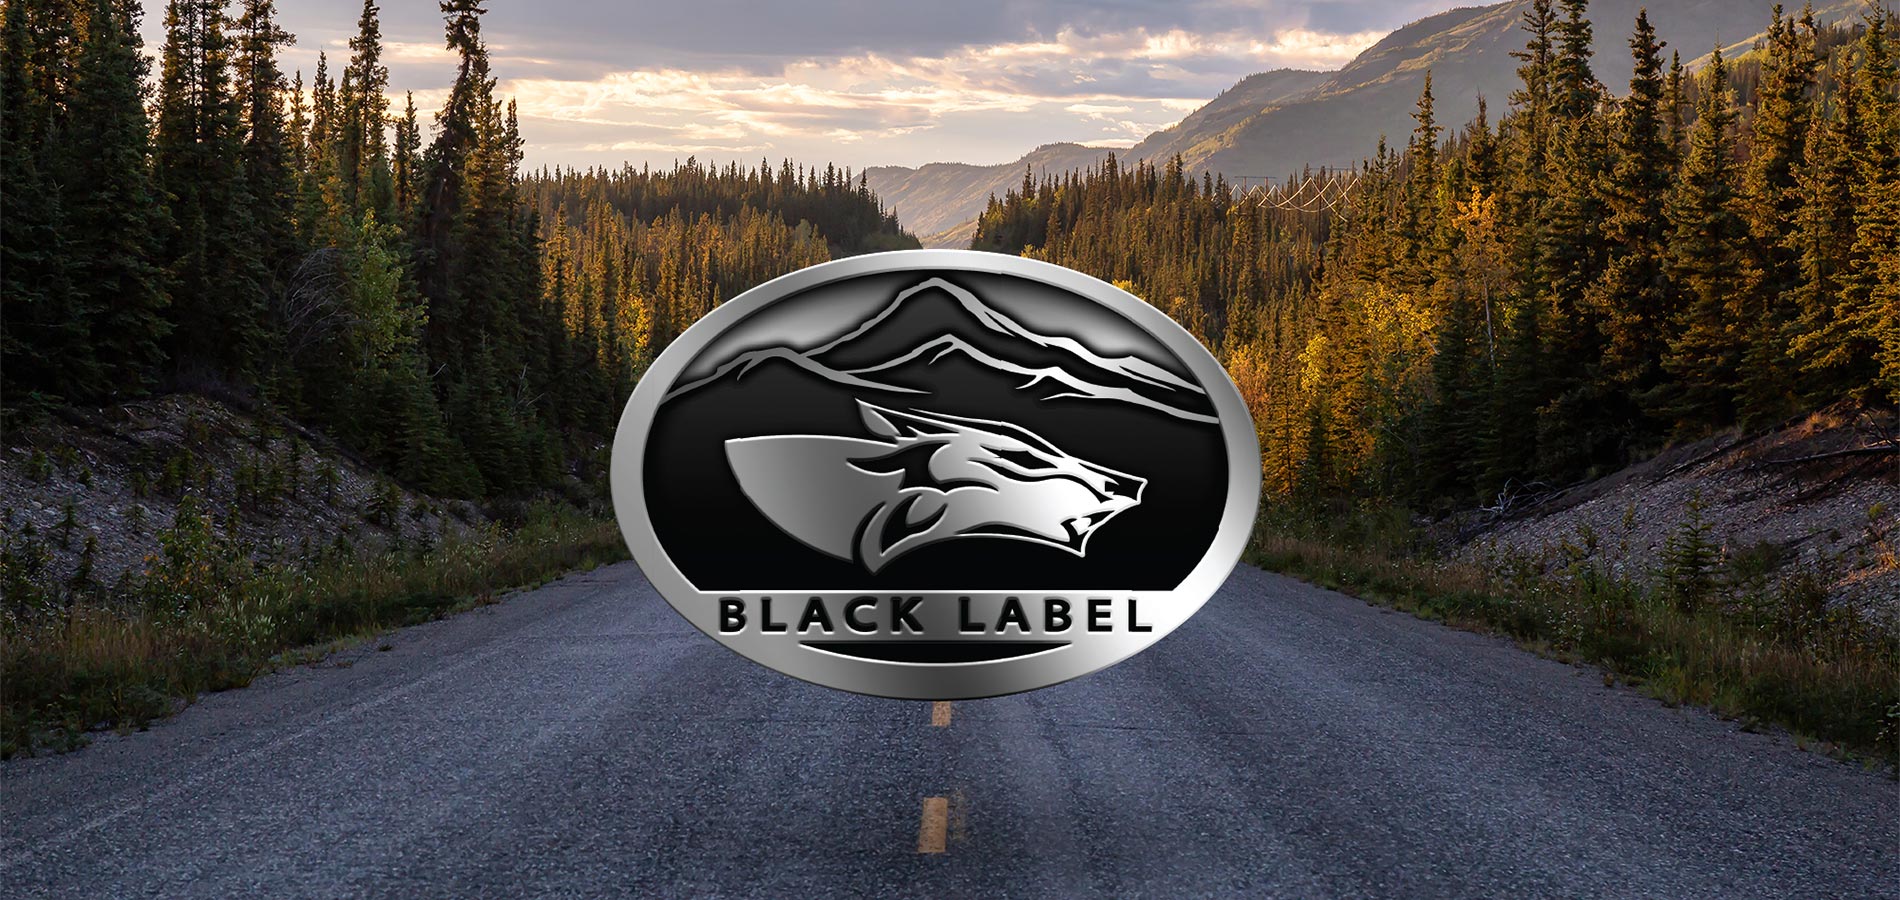 Cherokee Black Label RVs